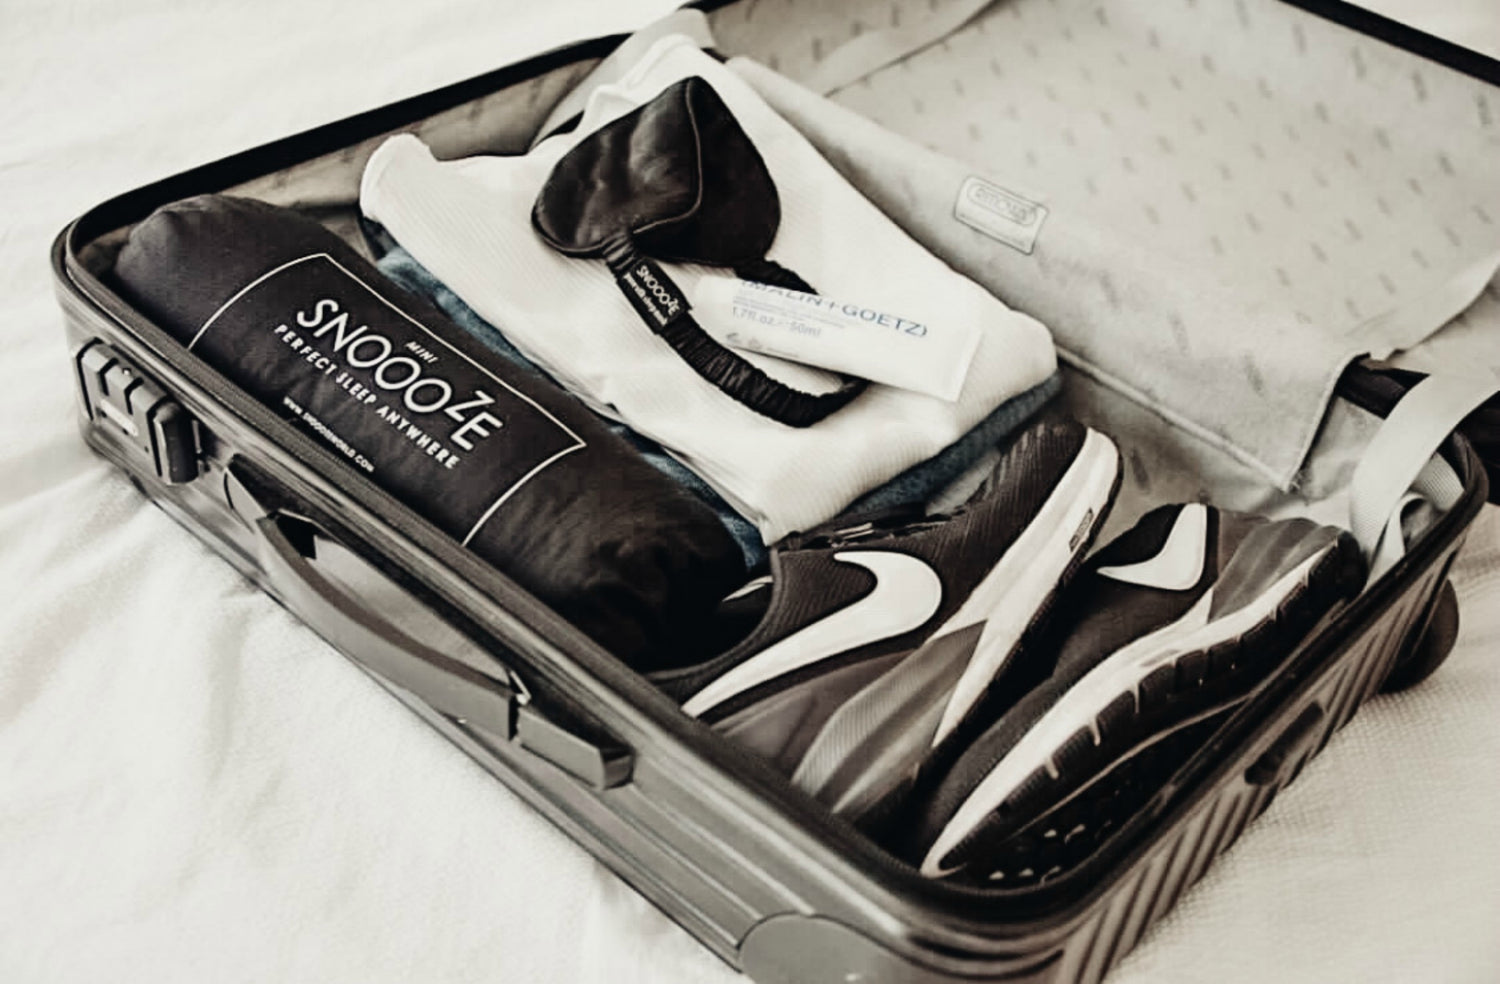 snoooze mini in suitcase